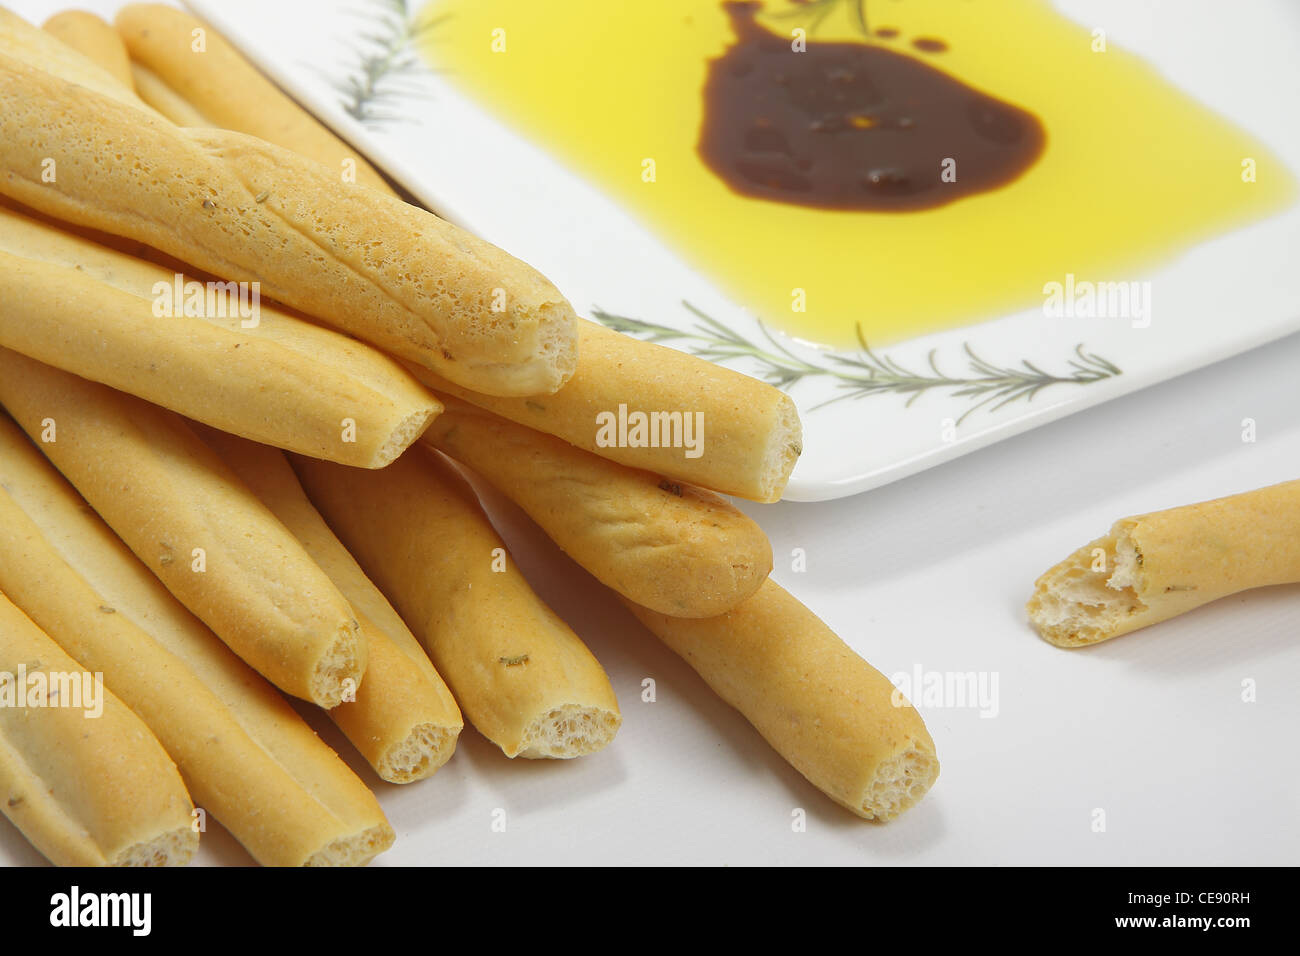 Breadsticks with oil and balsamic vinegar Stock Photo